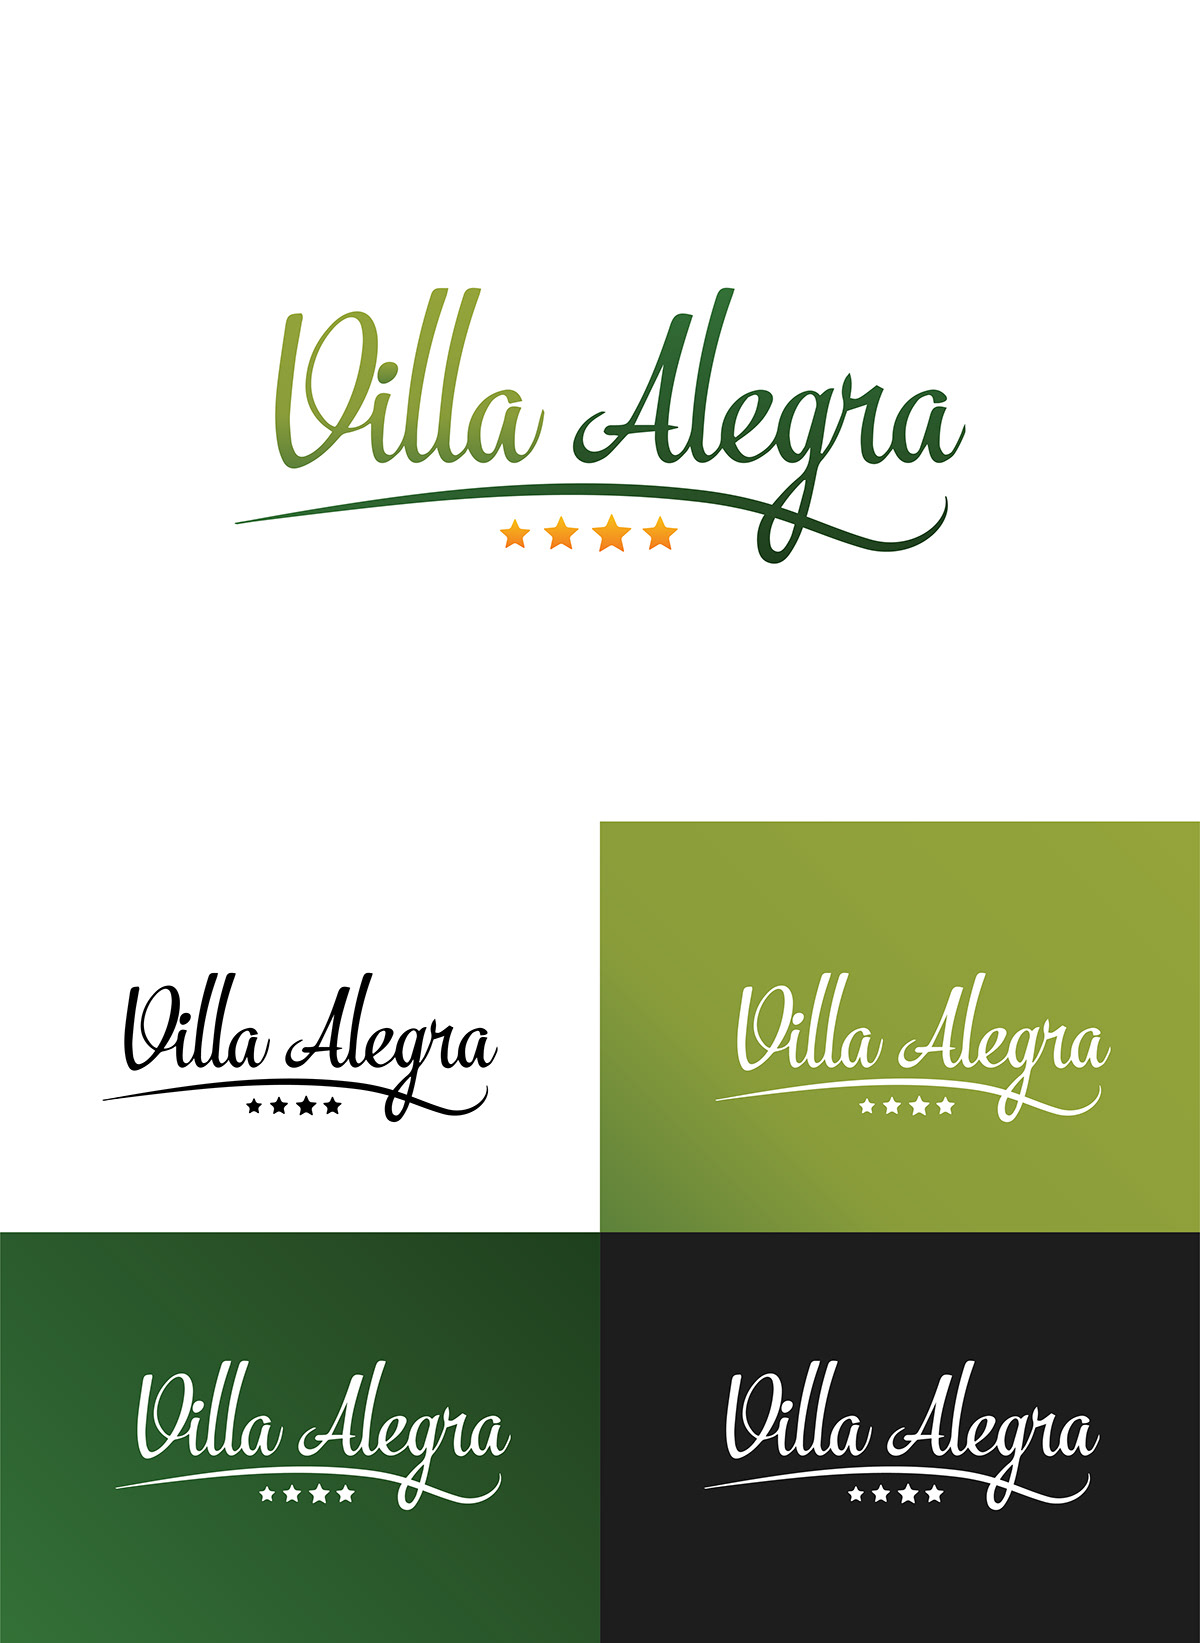 Logo Design Villa